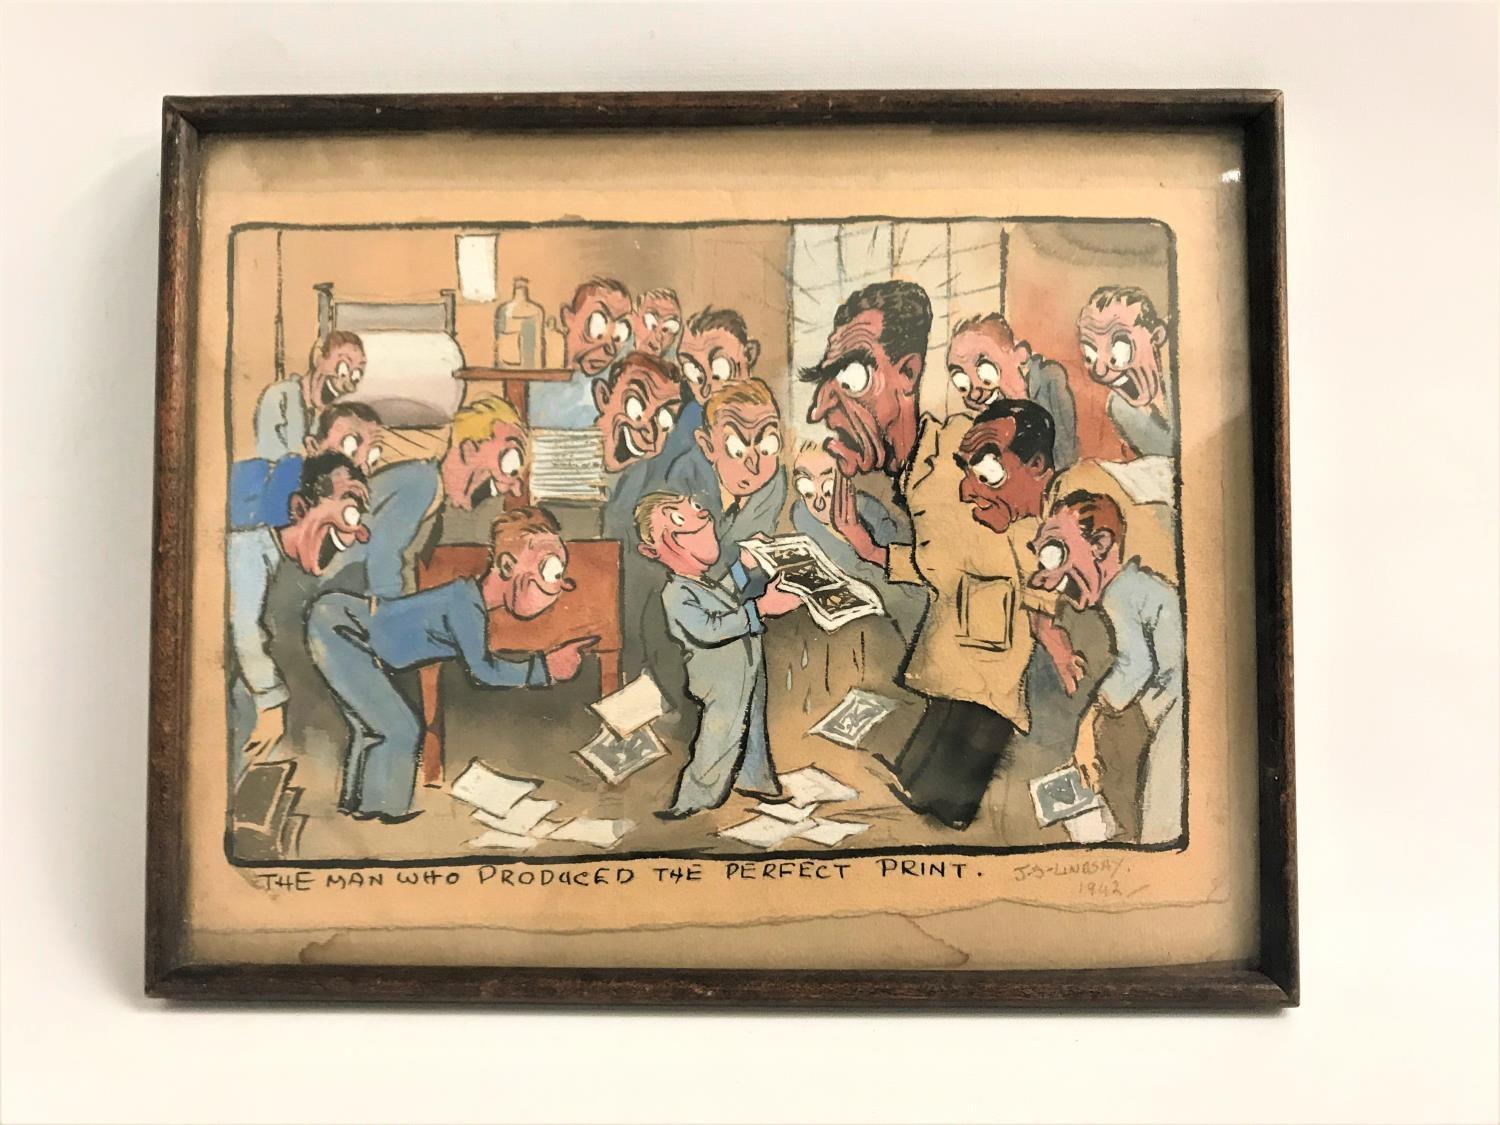 JACK LINDSAY PASTEL titled 'The man who produced the perfect print' signed J.S. Lindsay 1942, framed